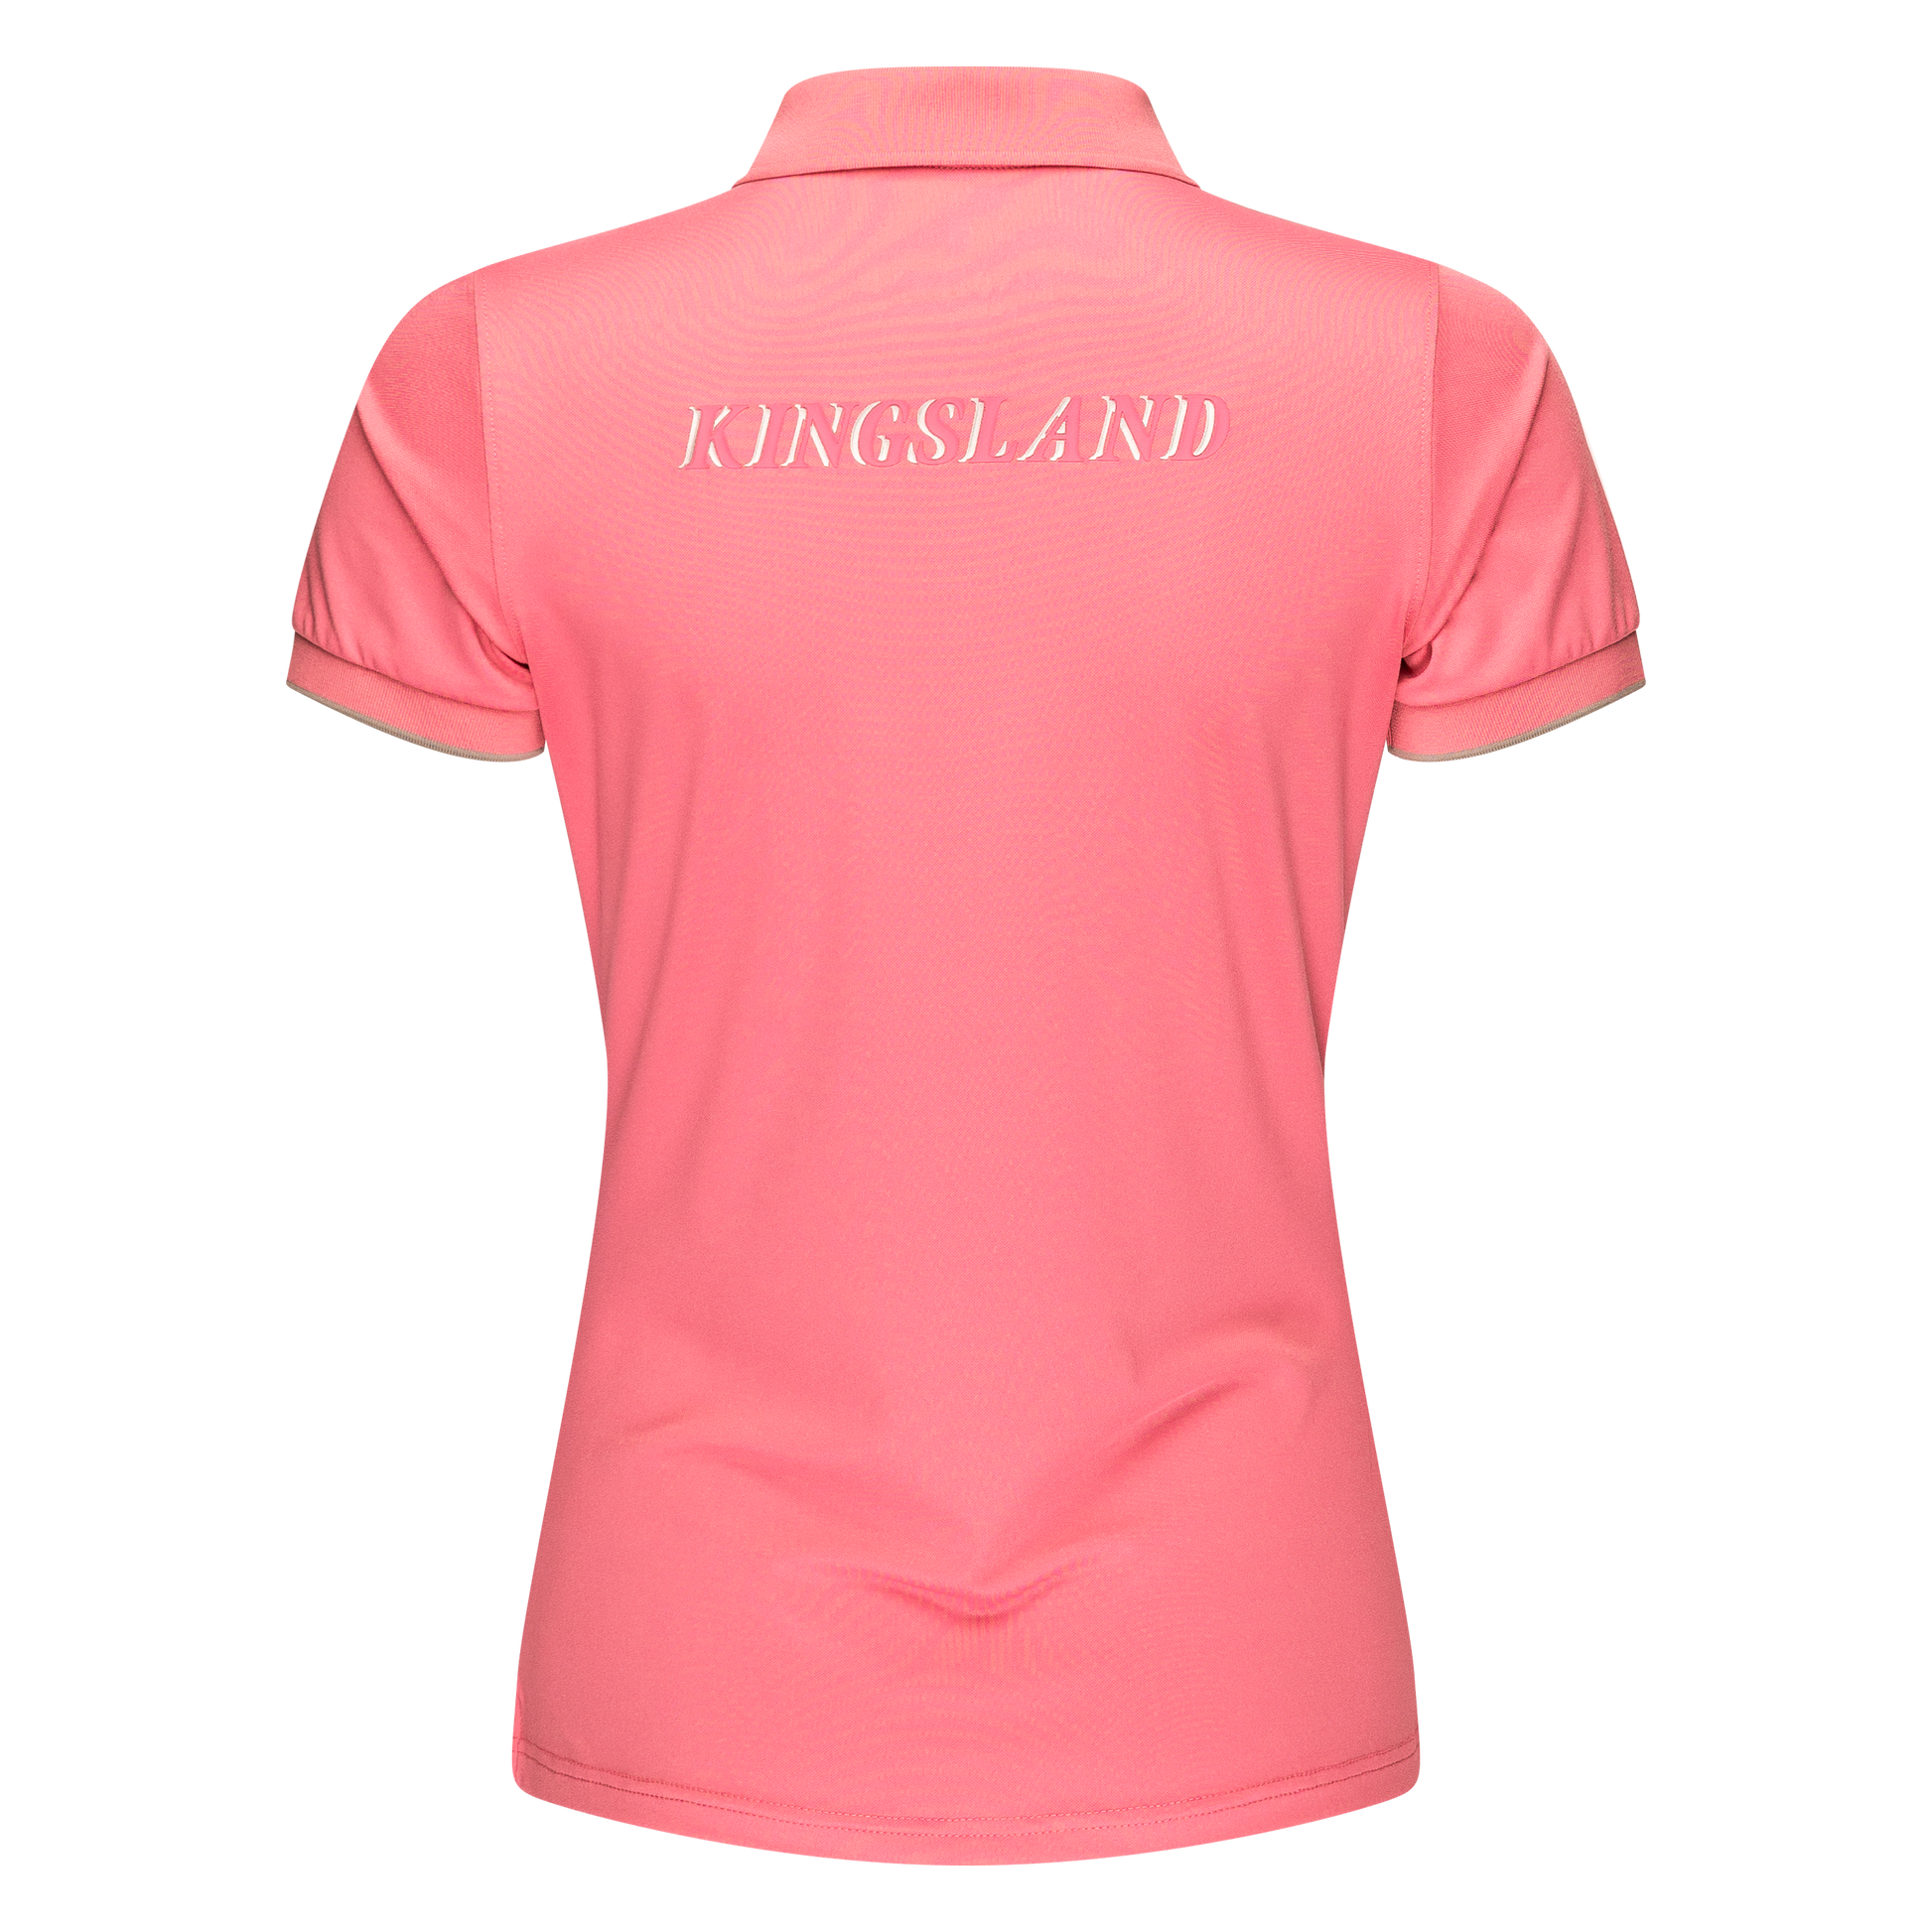 Kingsland Equestrian Riding Cadence Ladies Tec Pique Polo Shirt pink rose